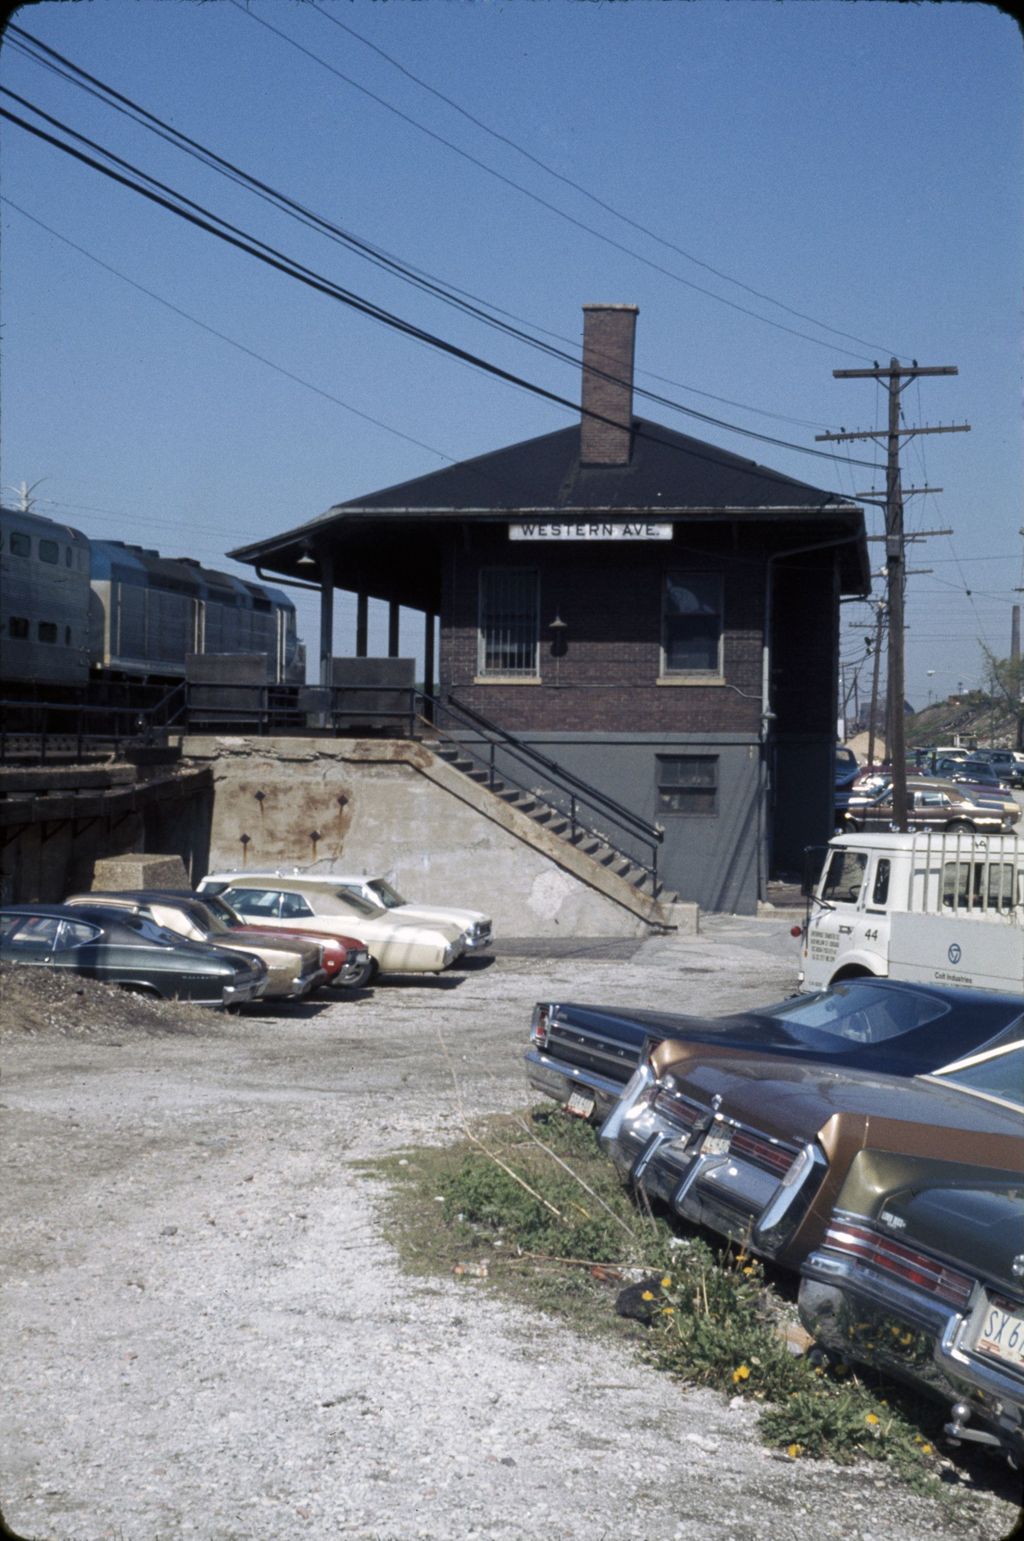 Western Avenue railroad station, Milwaukee Road Line